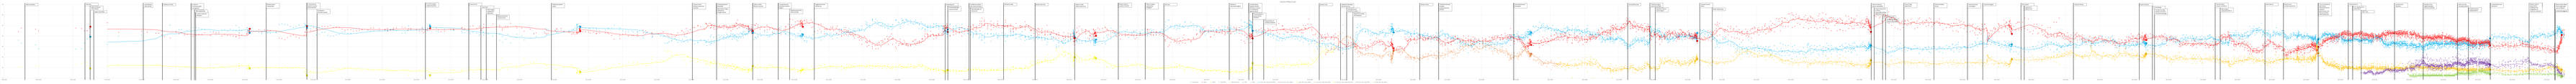 1943-2017 Graph of UK Polls